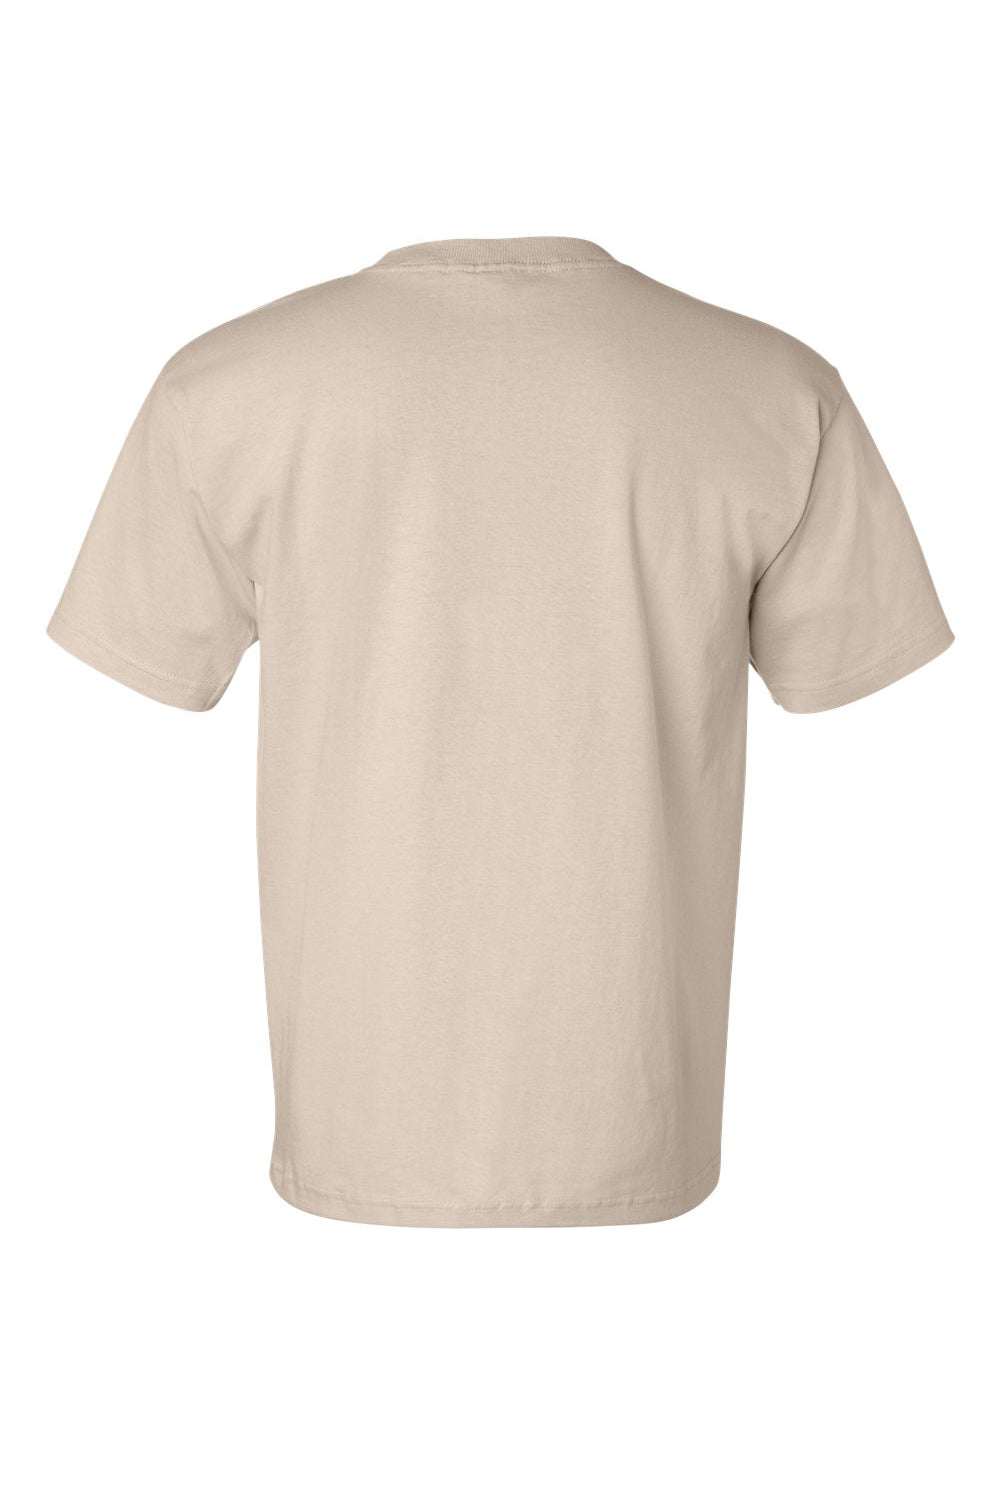 Bayside BA7100 Mens USA Made Short Sleeve Crewneck T-Shirt w/ Pocket Sand Flat Back